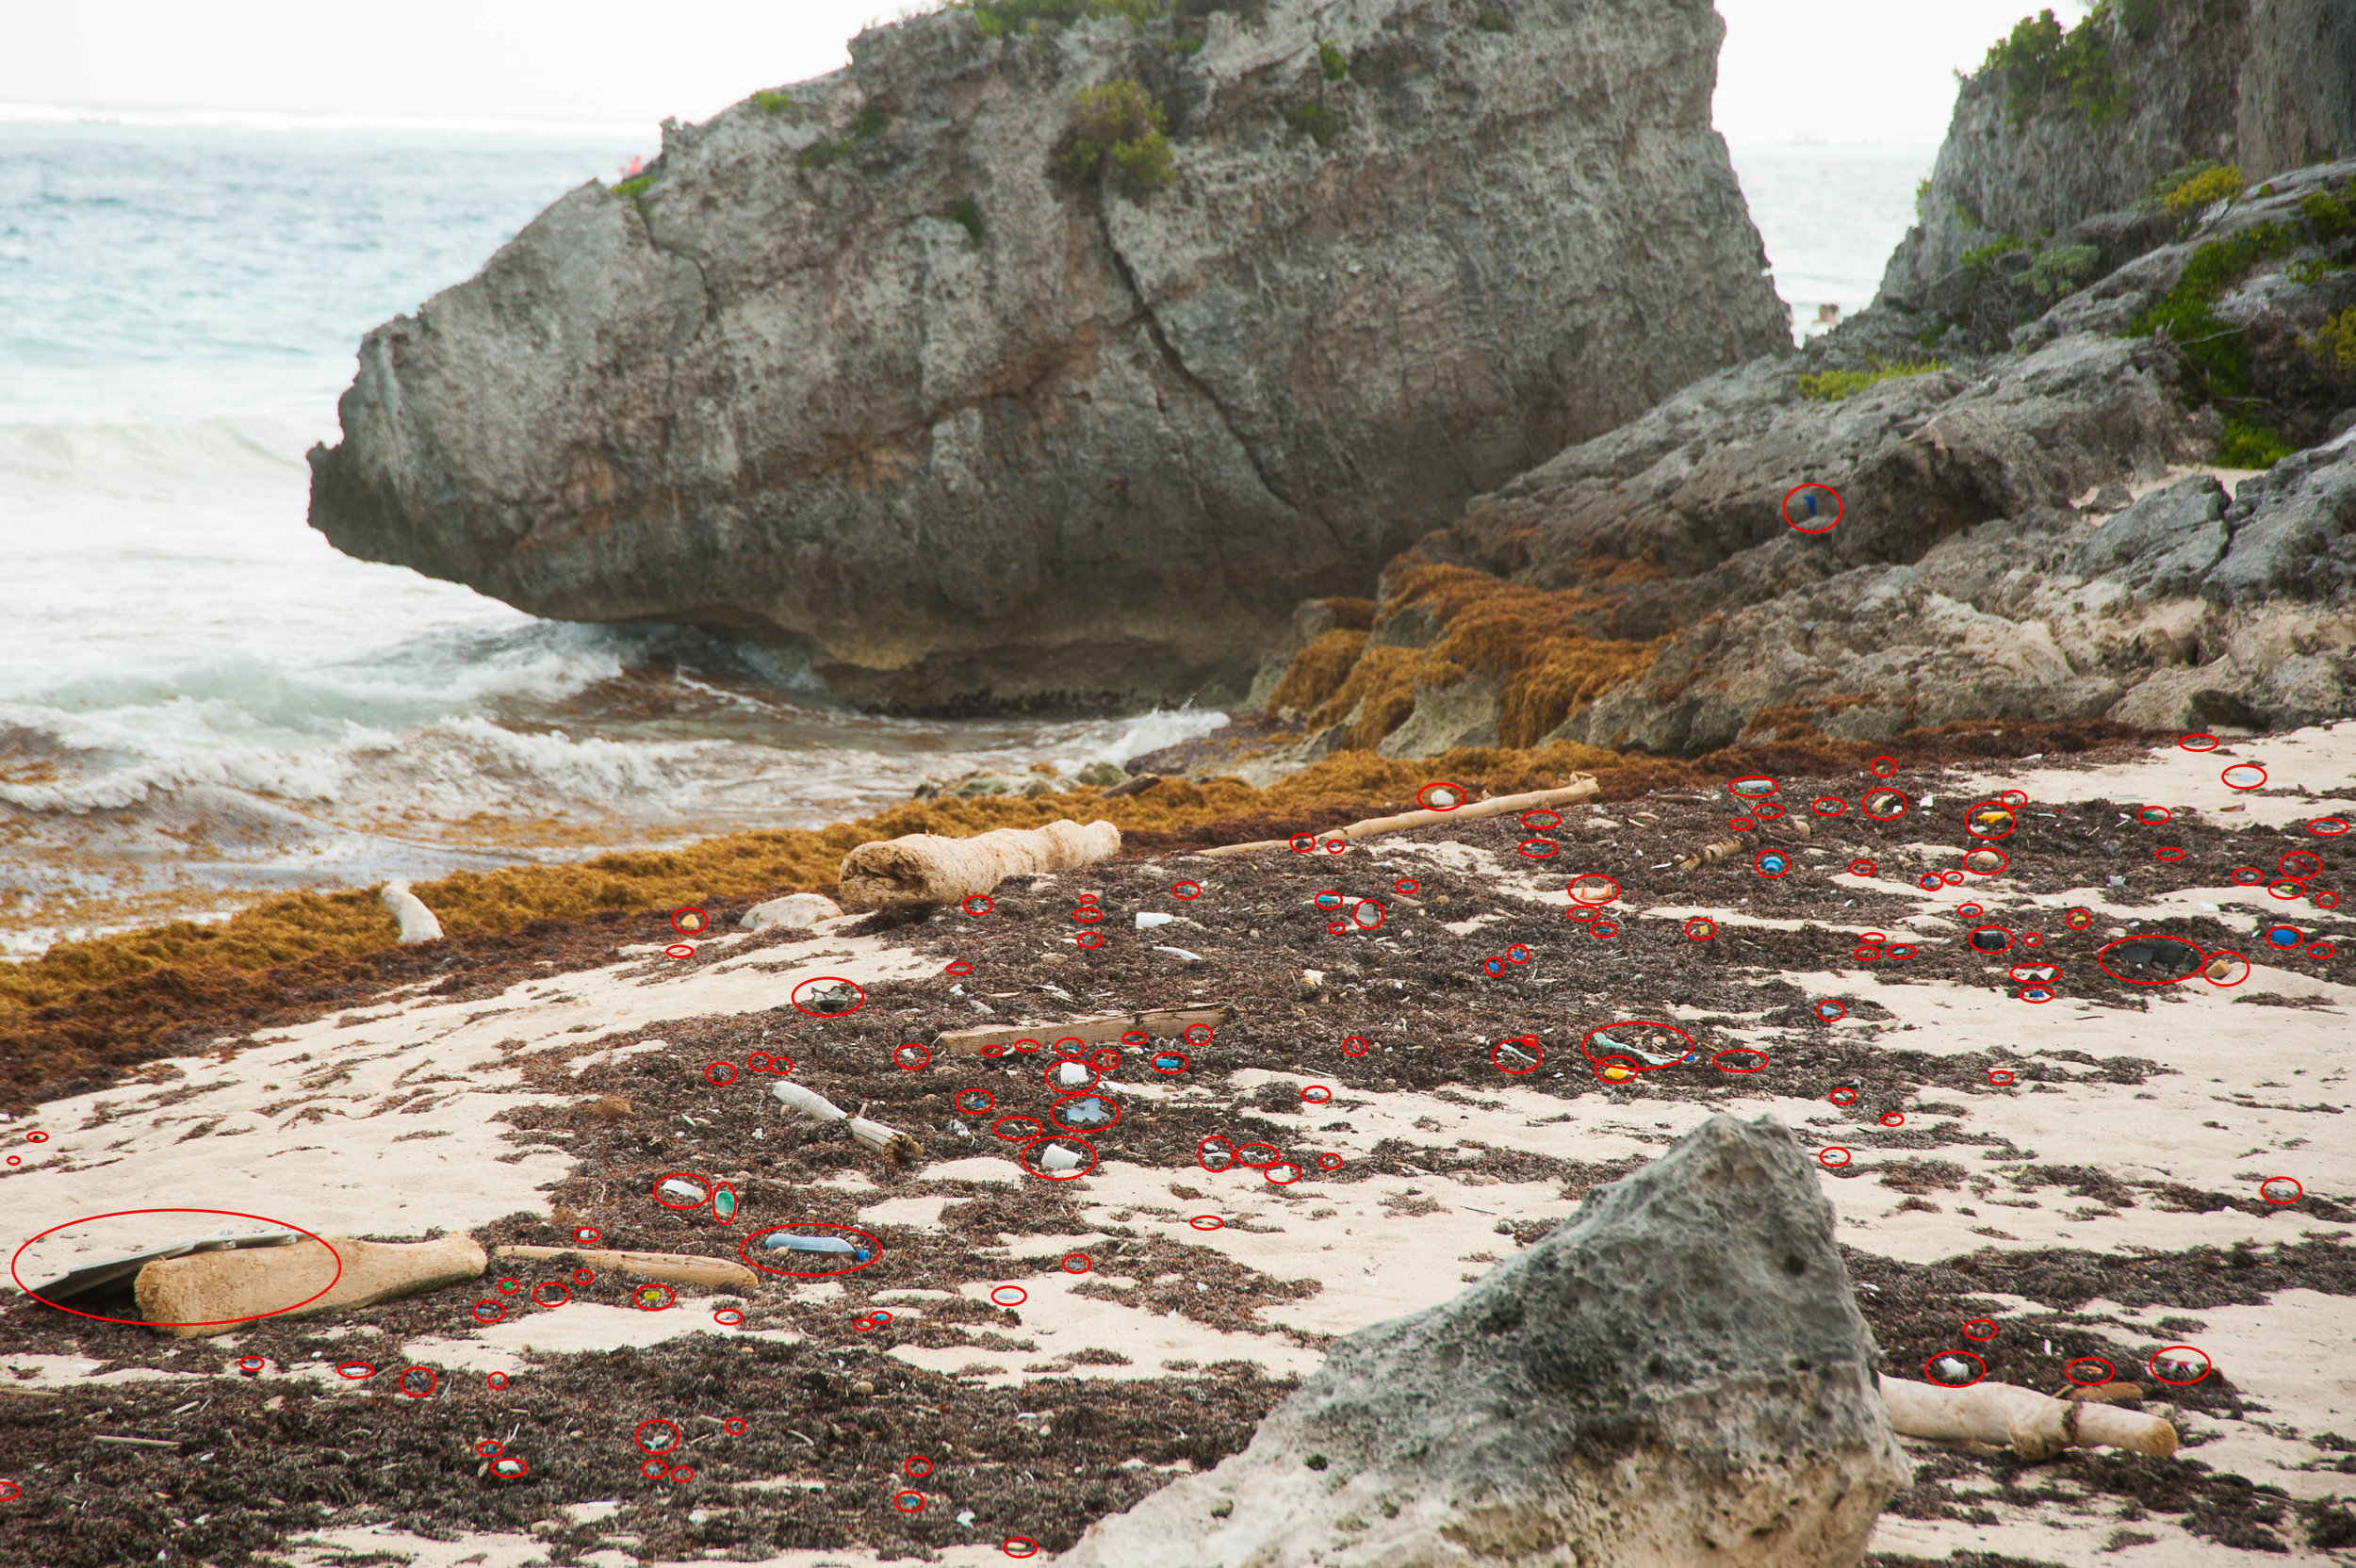 Ocean Plastic: The Myth of the Pristine Beach